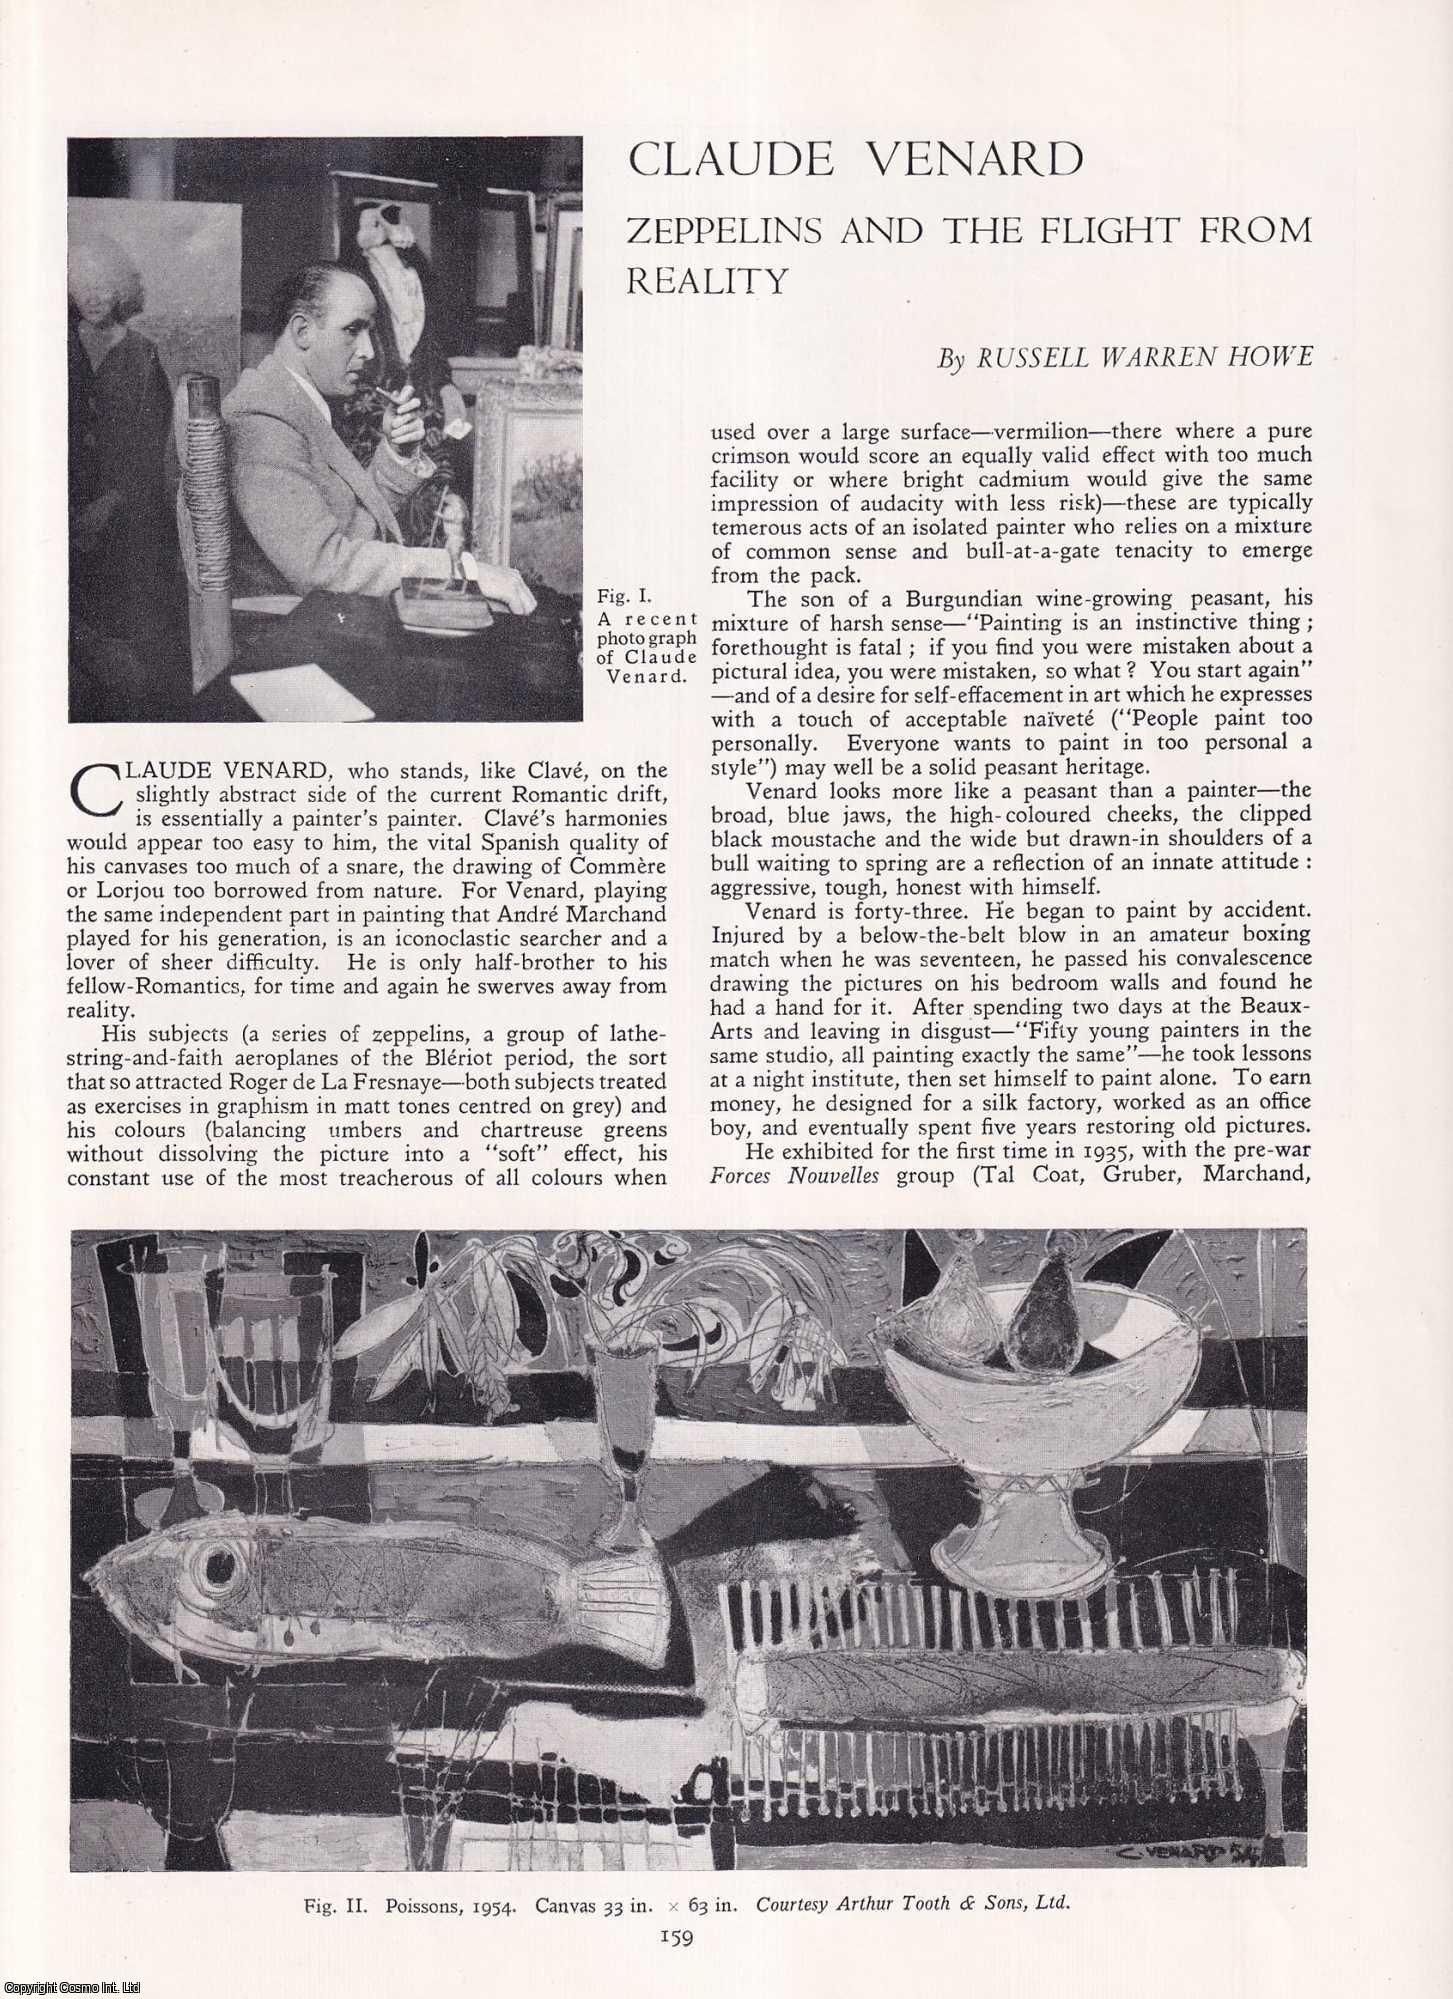 Russell Warren Howe - Claude Venard, Post-Cubist Painter. An original article from Apollo, International Magazine of the Arts, 1956.